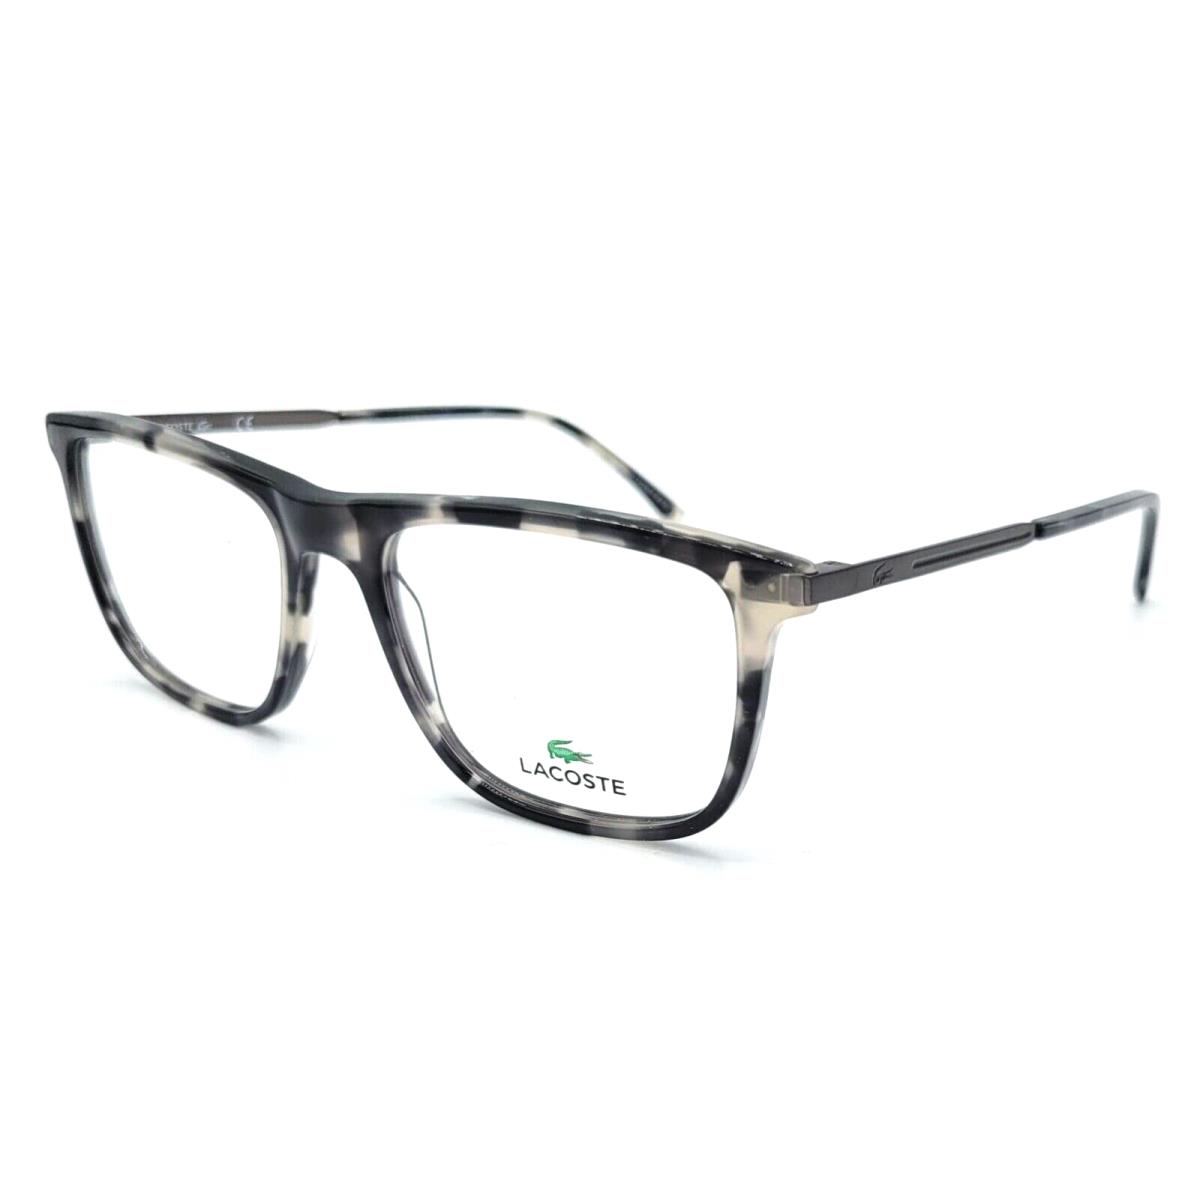 Lacoste - L2871 219 54/18/145 - Grey - Men Eyeglasses - Frame: Gray